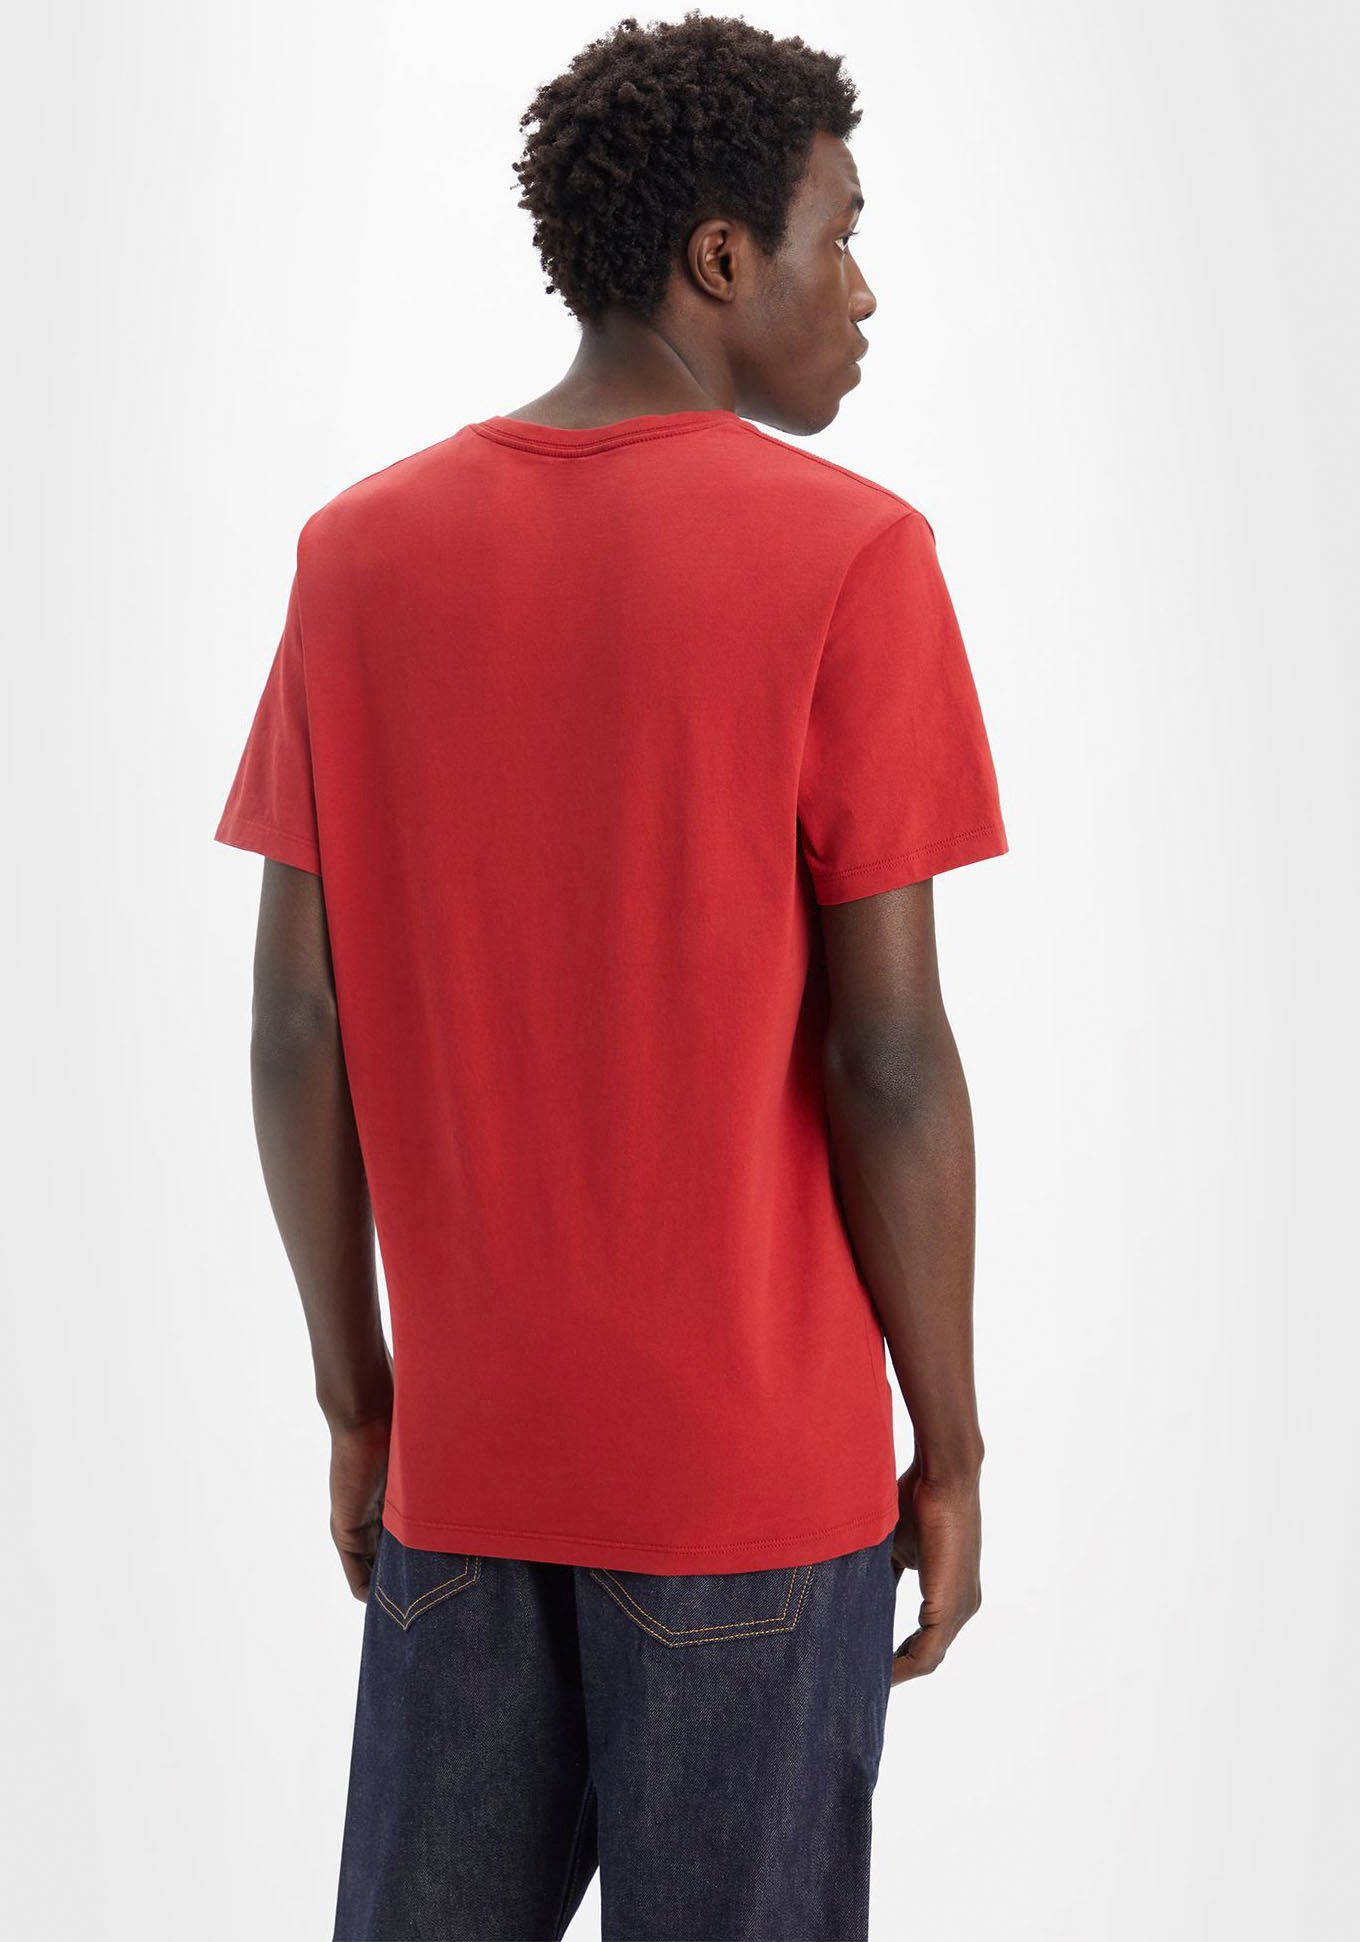 Levi's® V-Shirt LE ORIGINAL HM red Logostickerei VNECK rhythmic mit